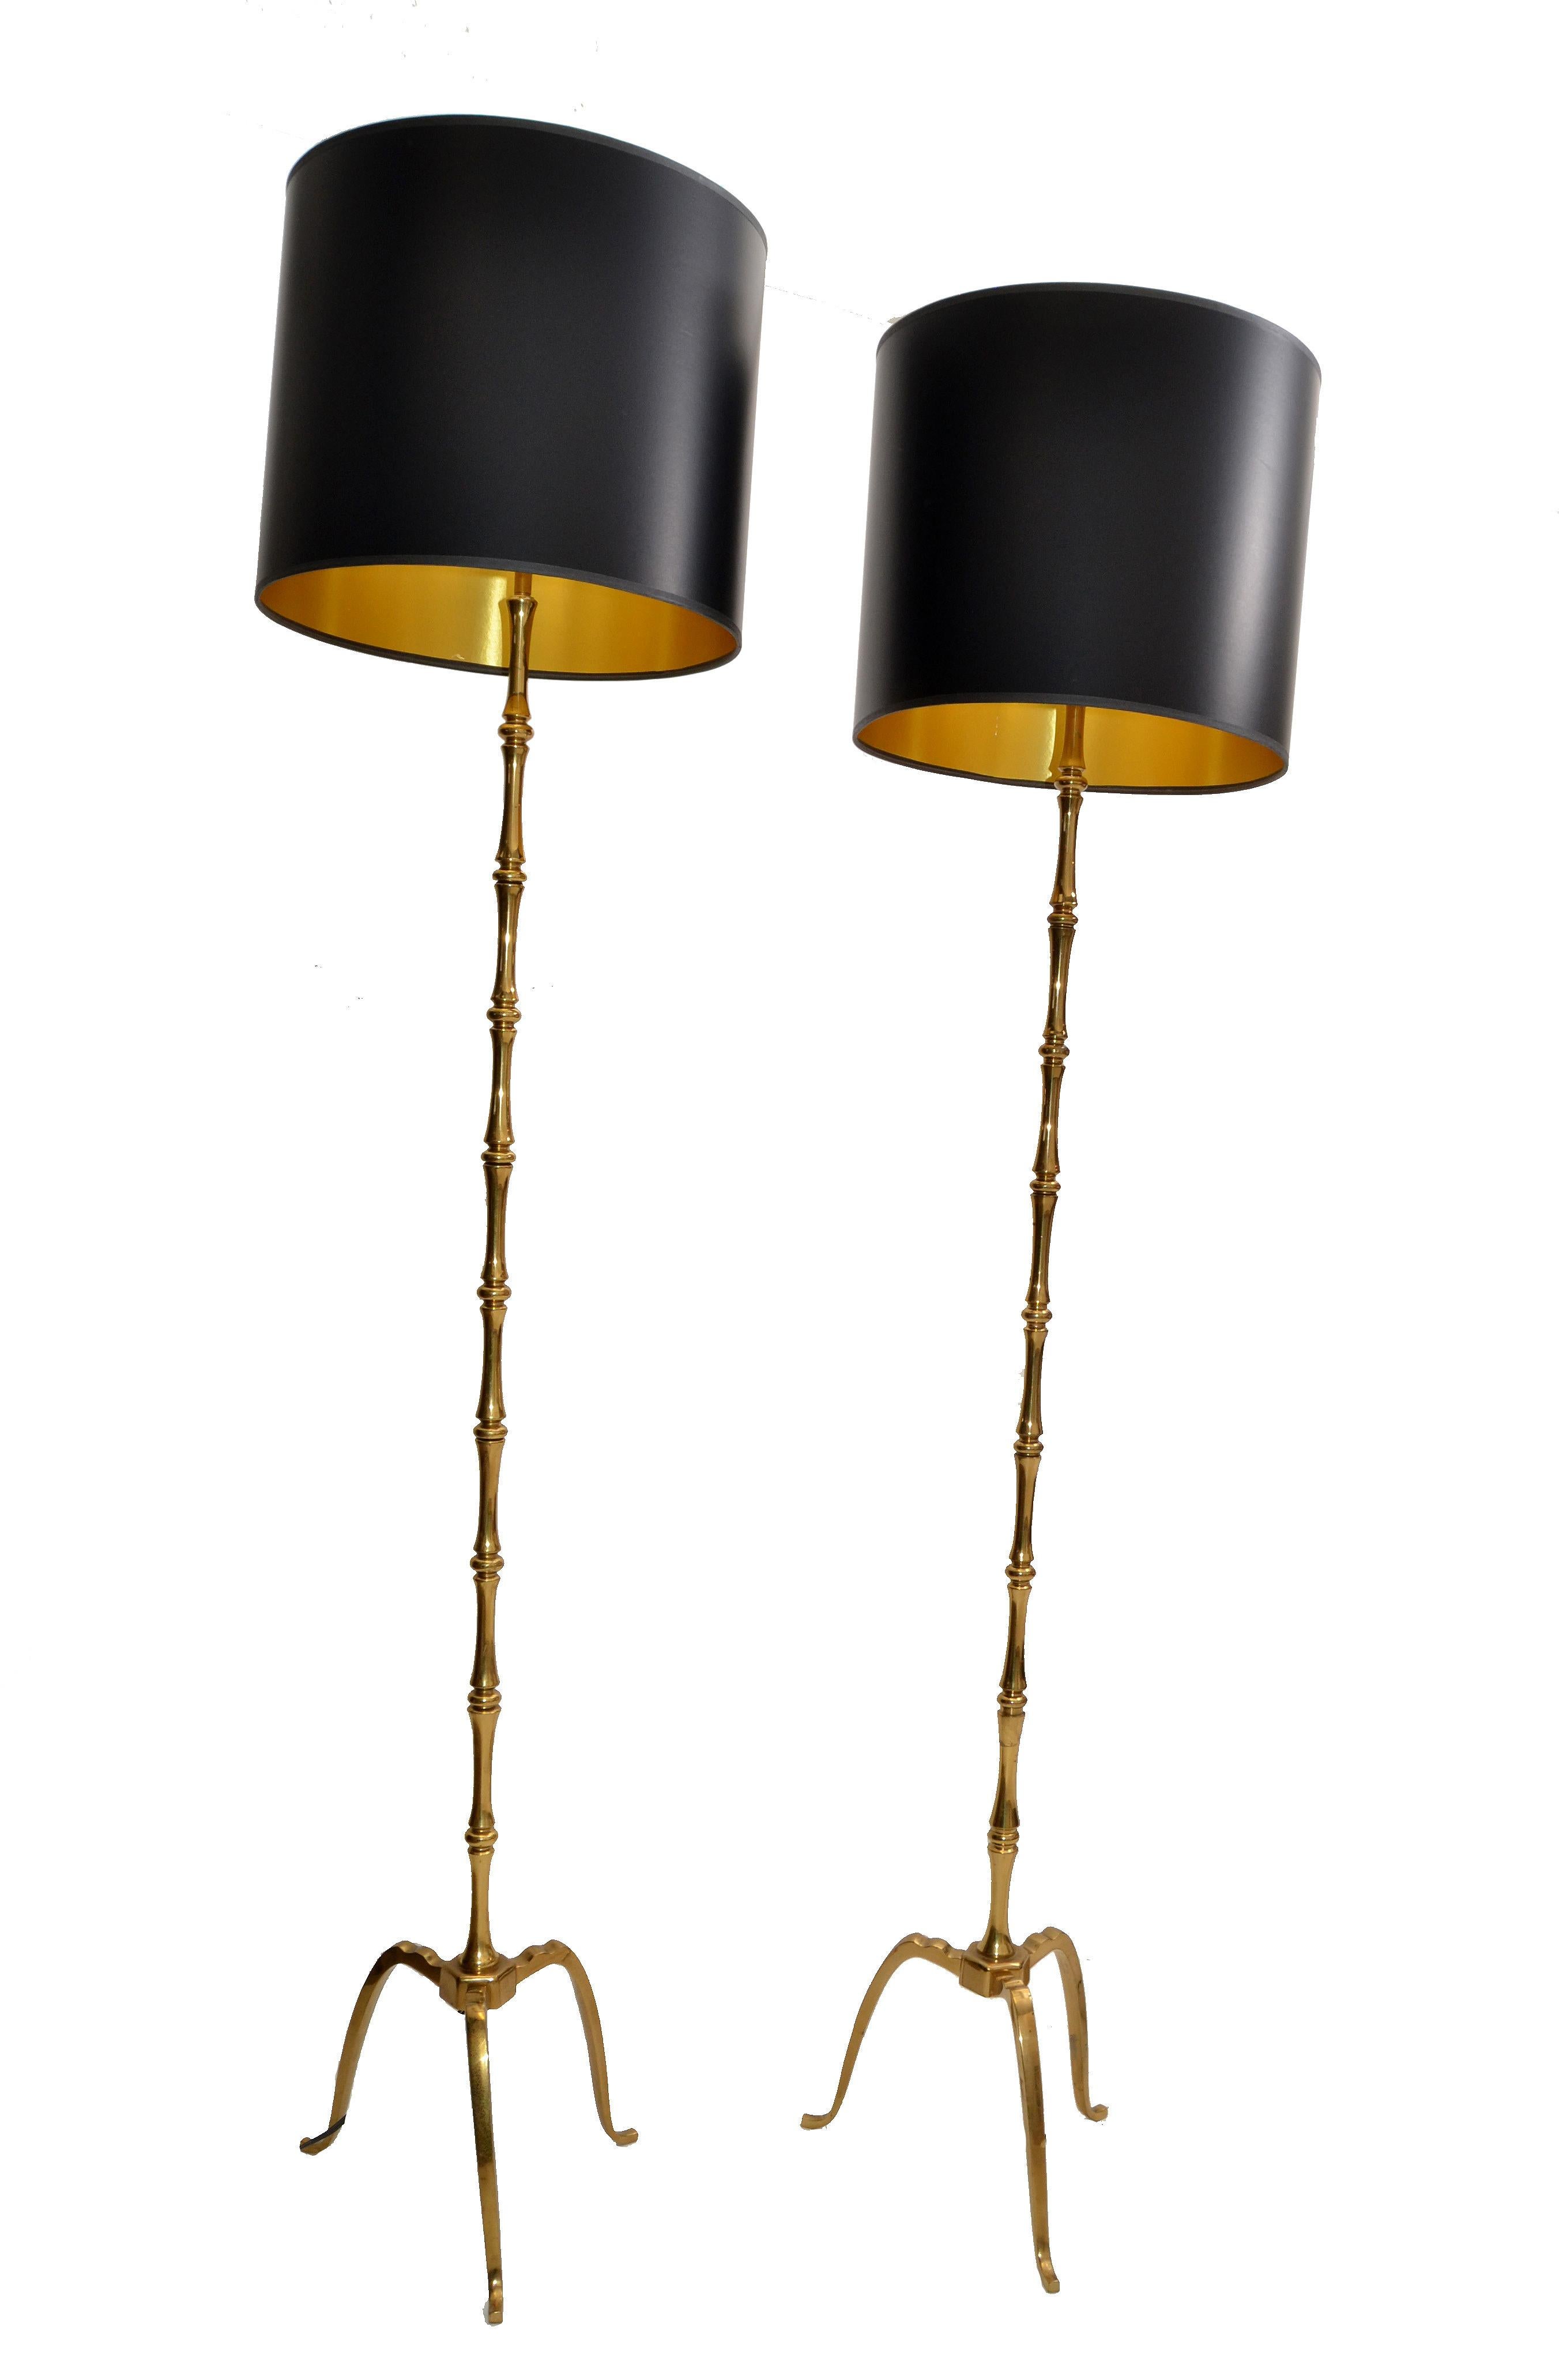 Maison Baguès Brass Mid-Century Modern Floor Lamp France 1950 Black Shade, Pair For Sale 4